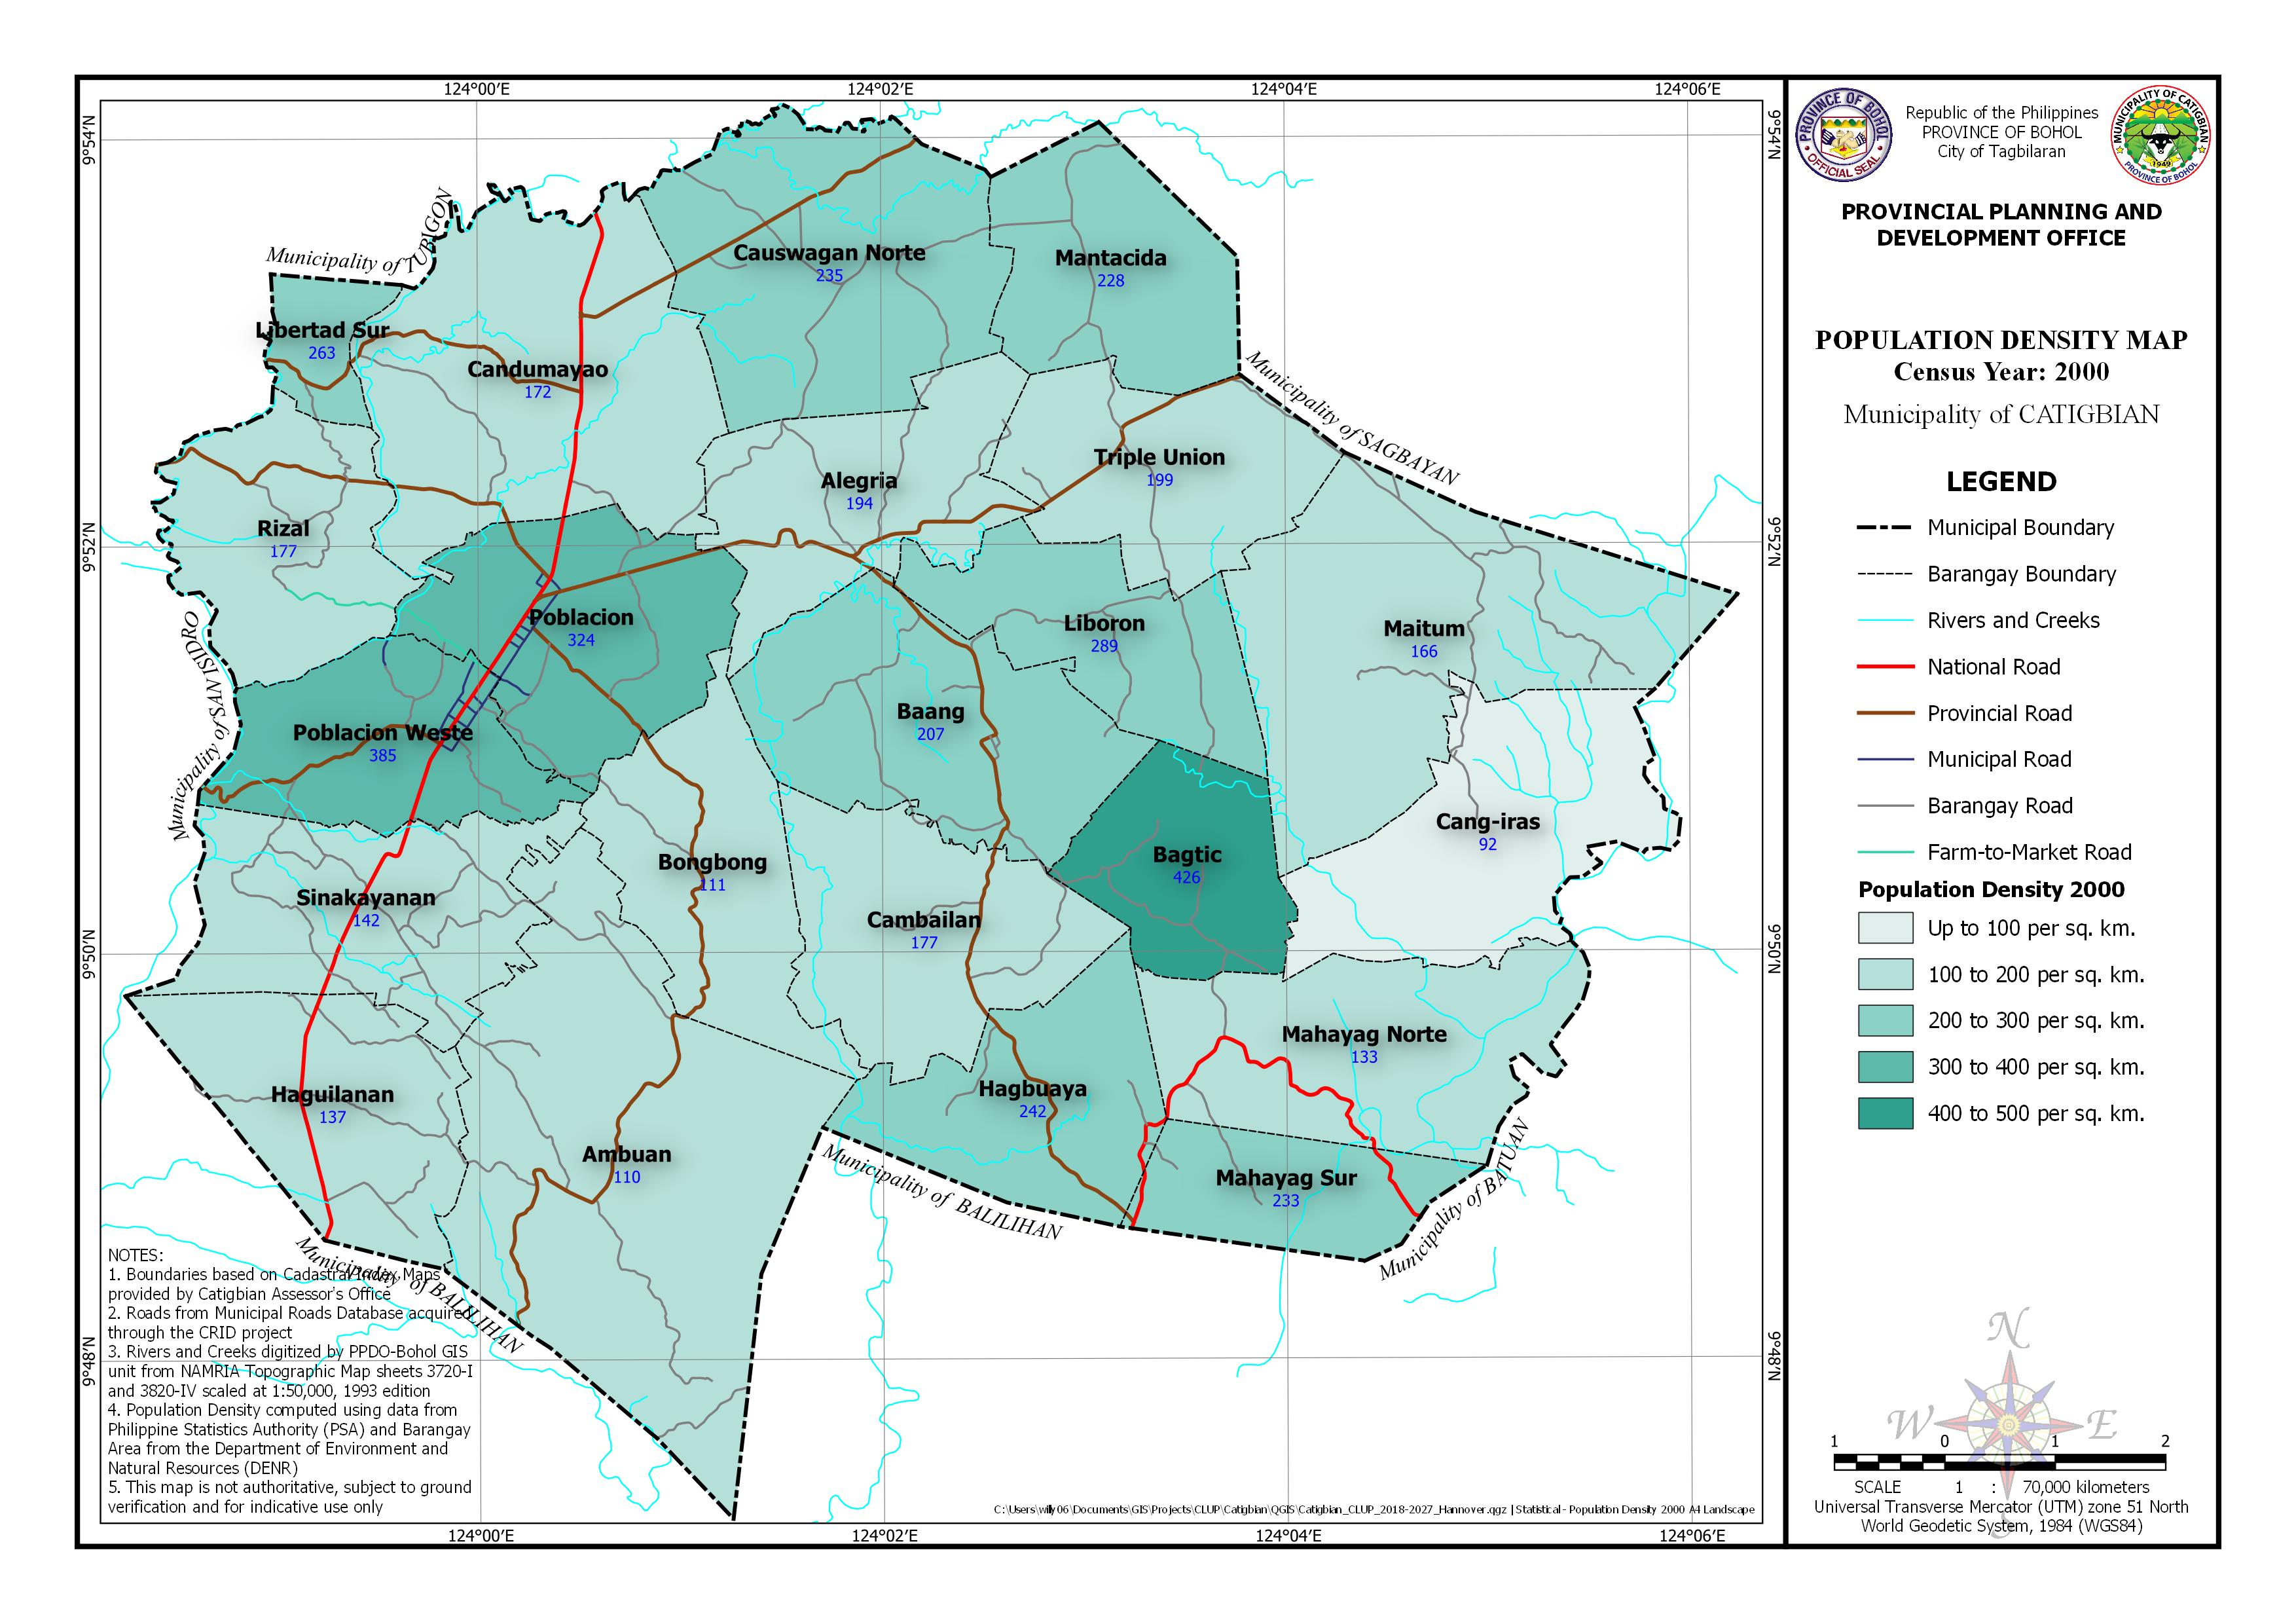 Population Density Census Year: 1995